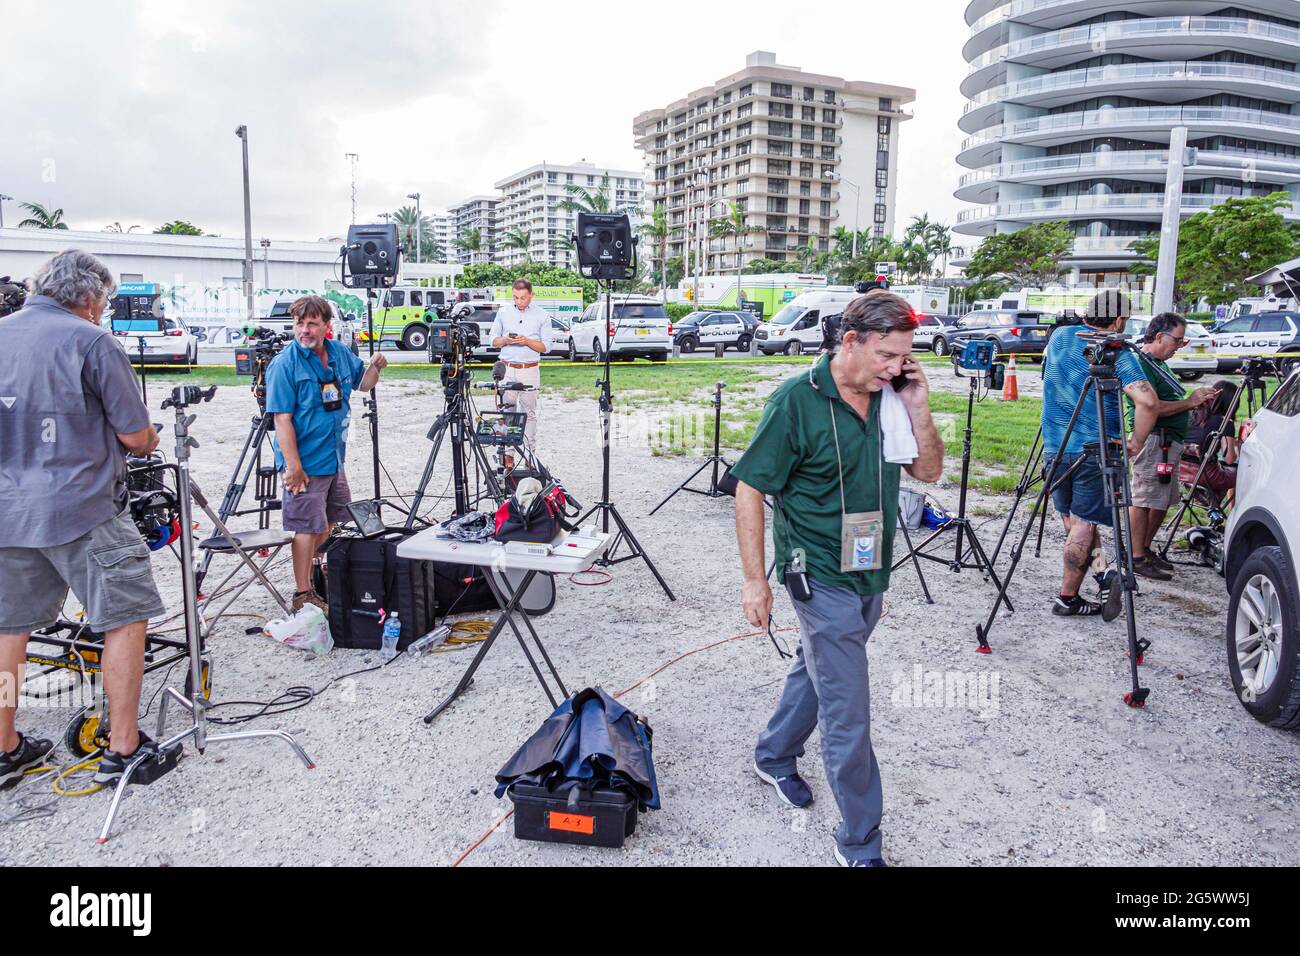 Miami Beach Florida Surfside Champlain Towers edificio de apartamentos colapsar noticias colapsadas prensa medios miembros de la tripulación hombres instalar equipo Foto de stock